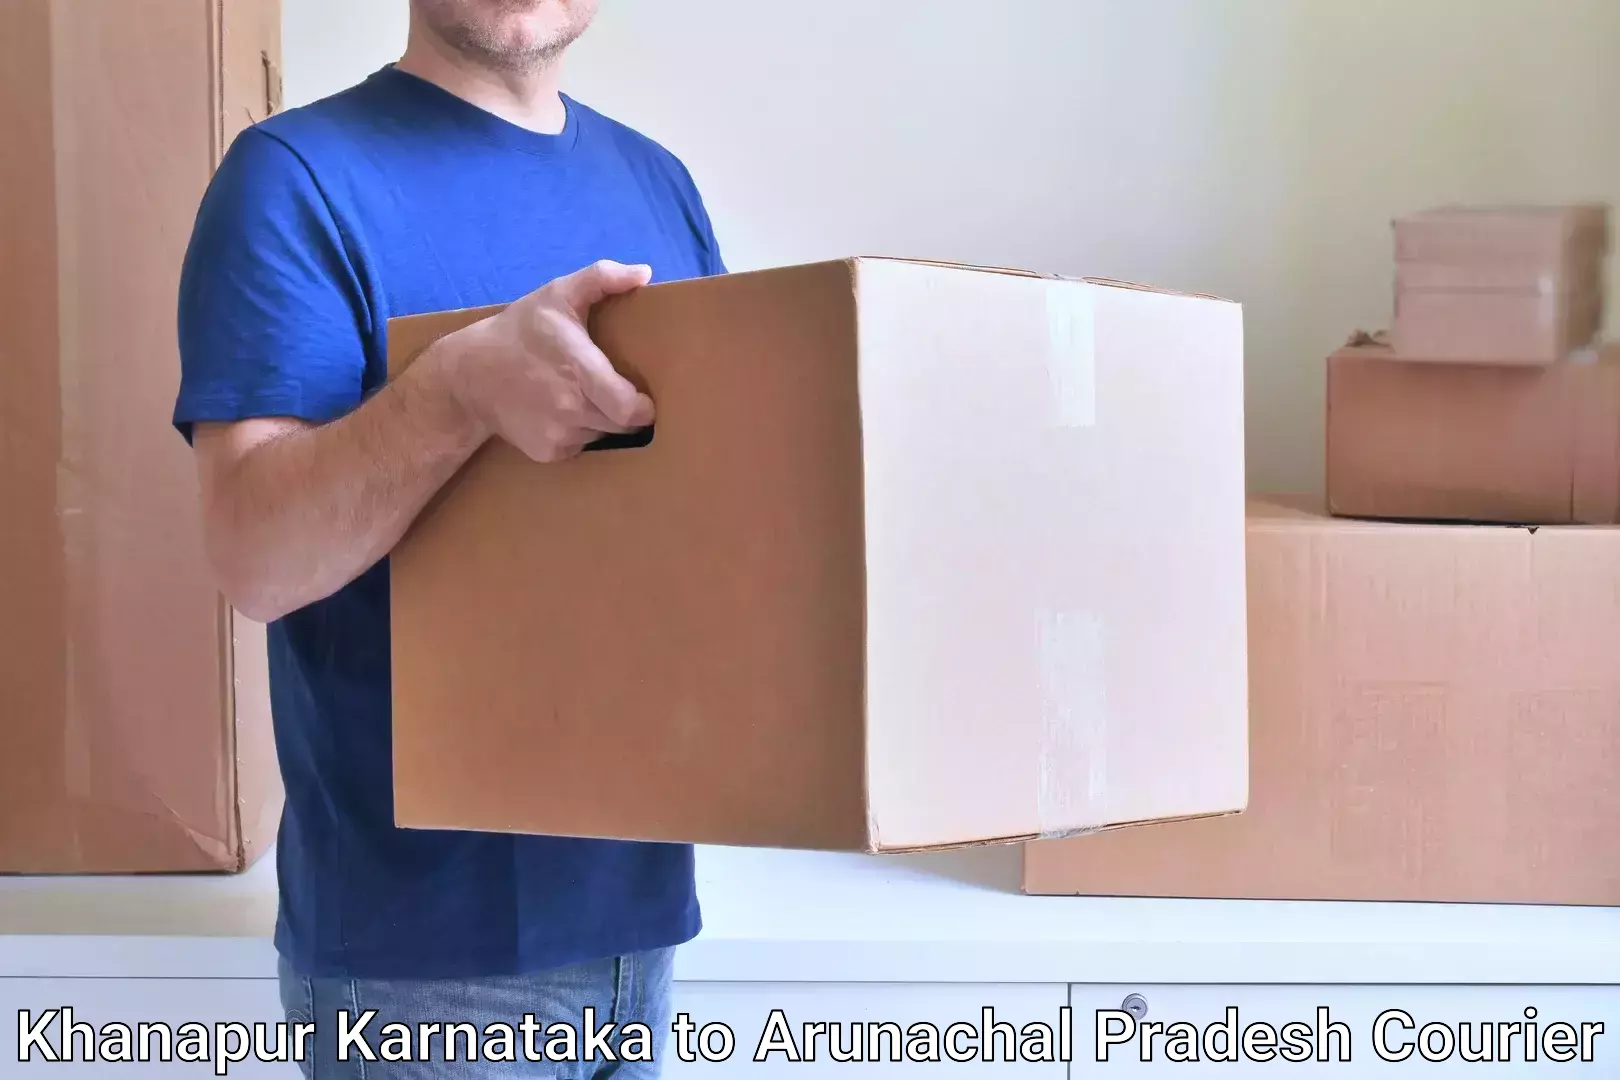 Next day courier Khanapur Karnataka to Khonsa